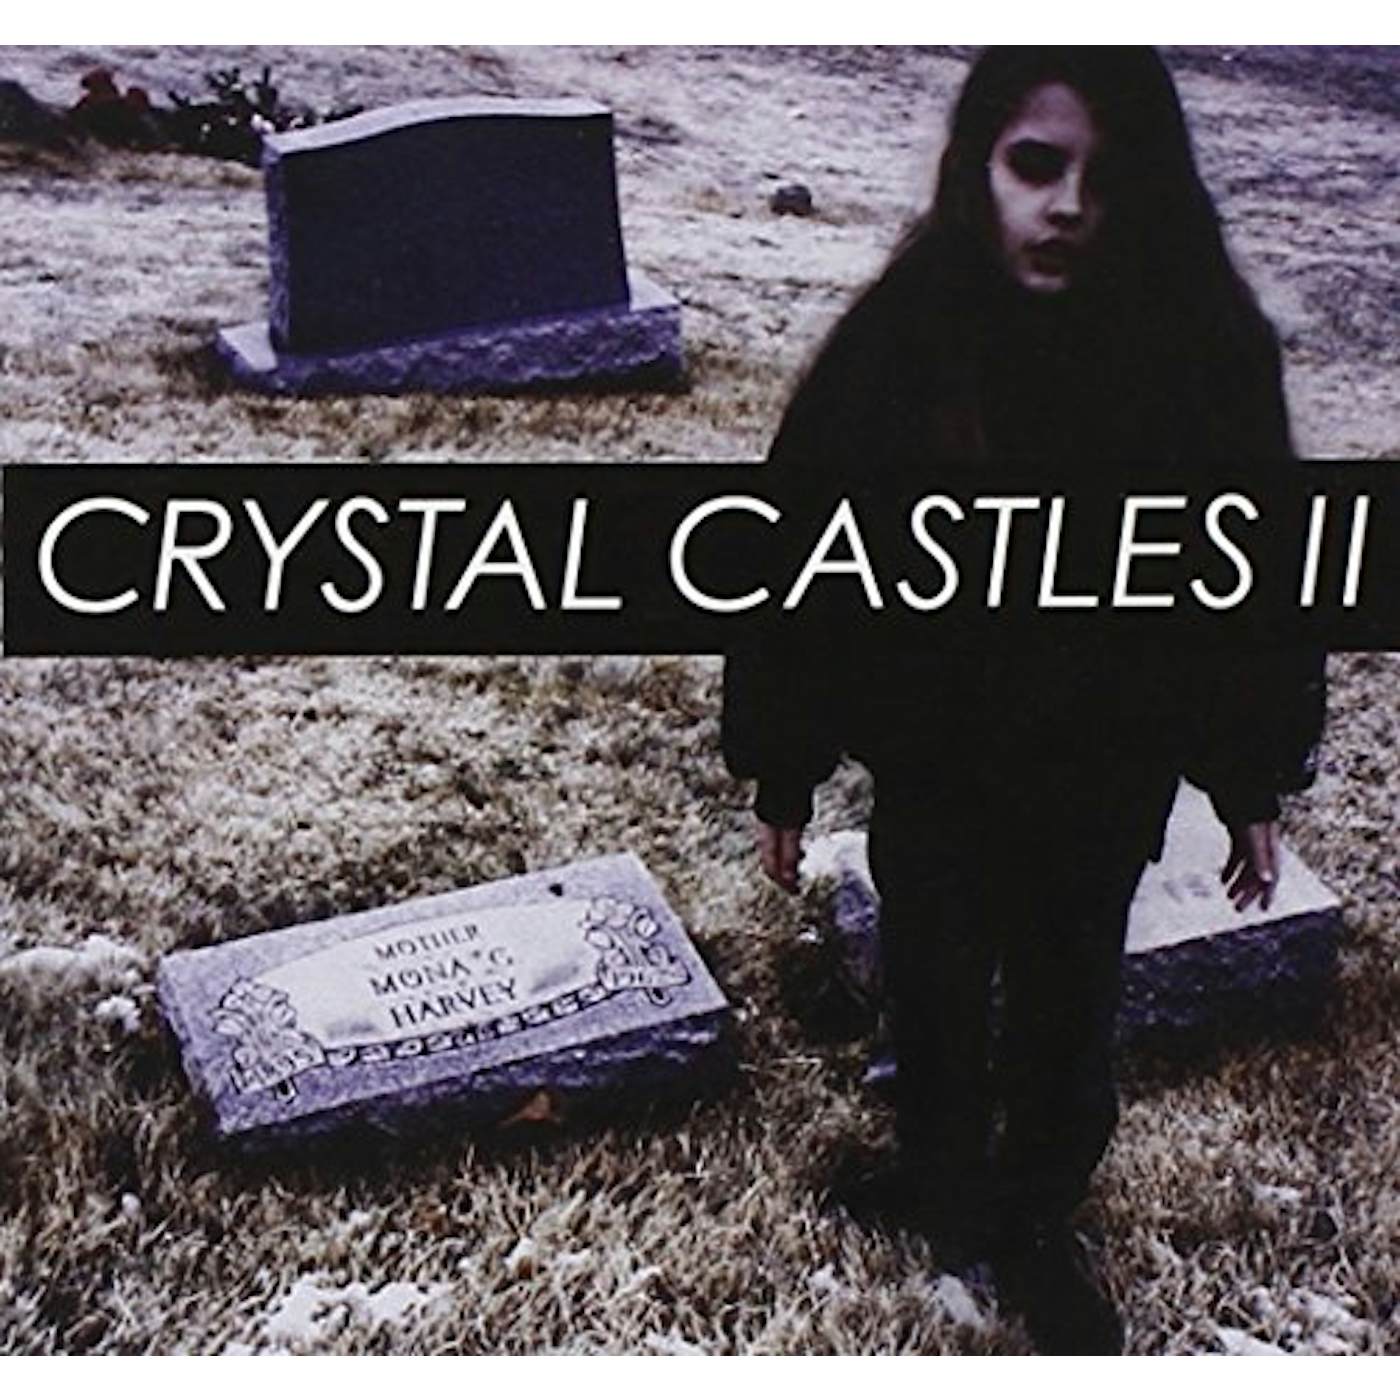 Crystal castles 1. Crystal Castles обложки альбомов. Crystal Castles 2003. Crystal Castles III обложка. Crystal Castles обложка первого альбома.